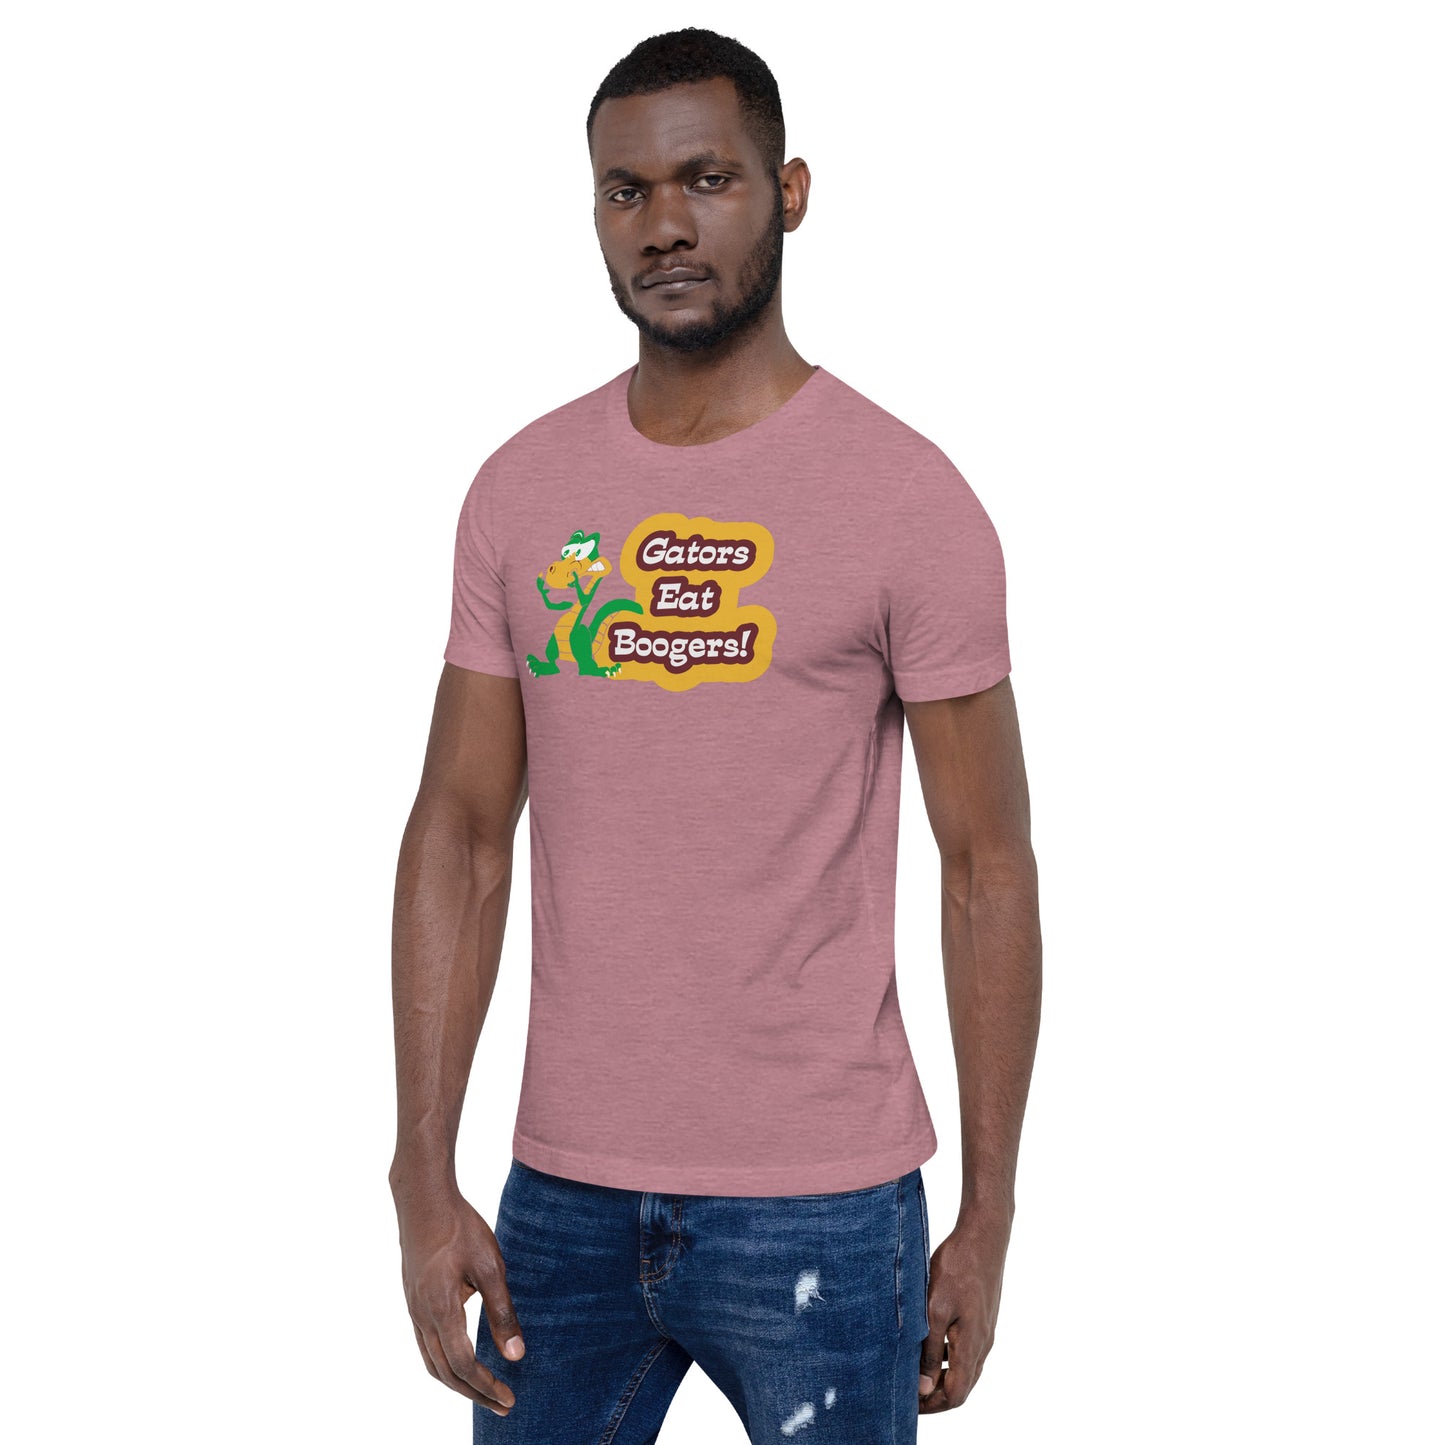 Gators Eat Boogers Garnet&Gold Logo Unisex t-shirt Plus Sizes